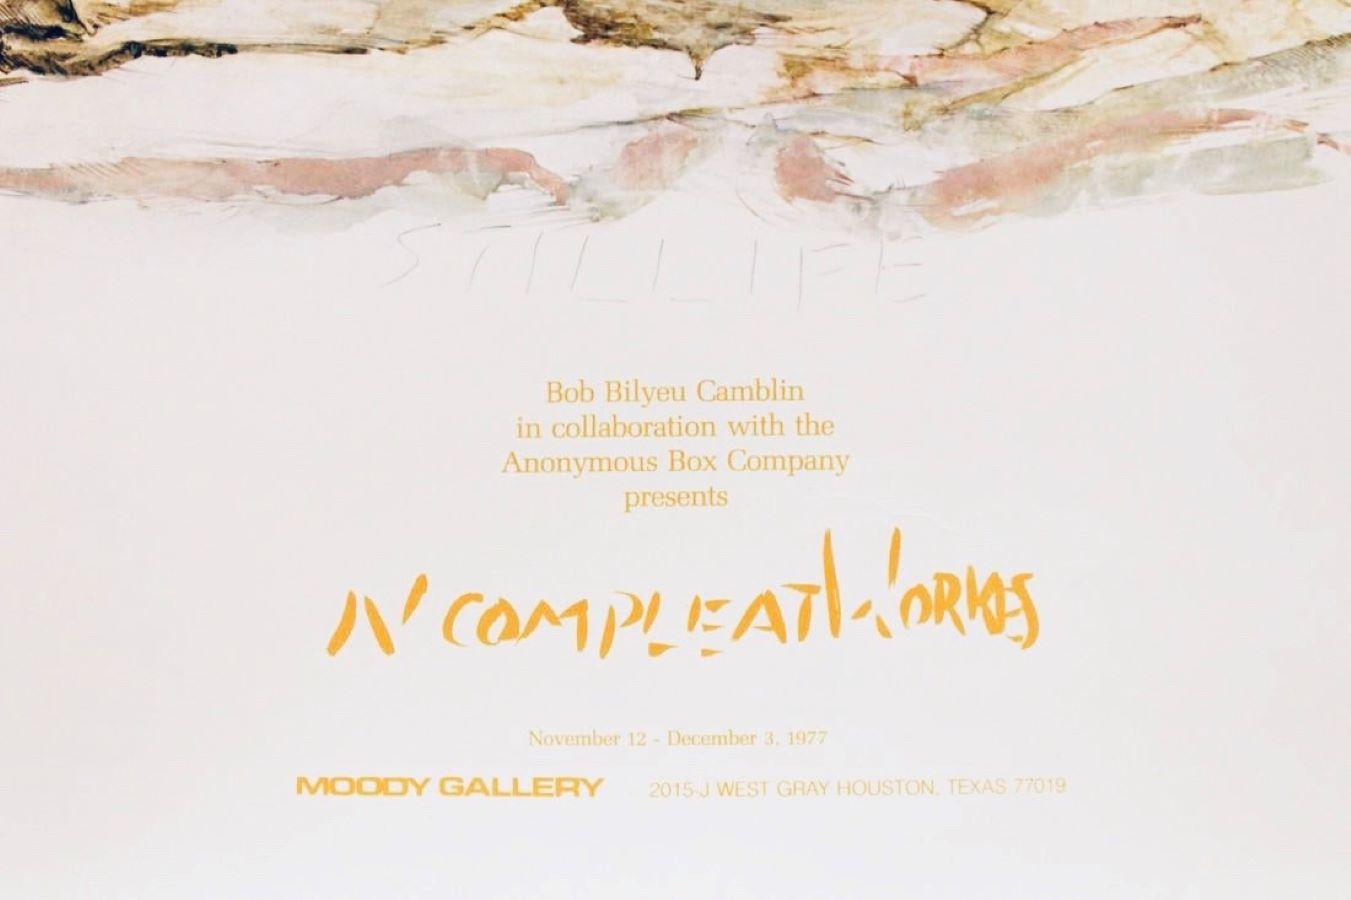 Poster-N'Compleat Workes, Moody Gallery/Anonymous Box Company - Print by Bob Bilyeu Camblin